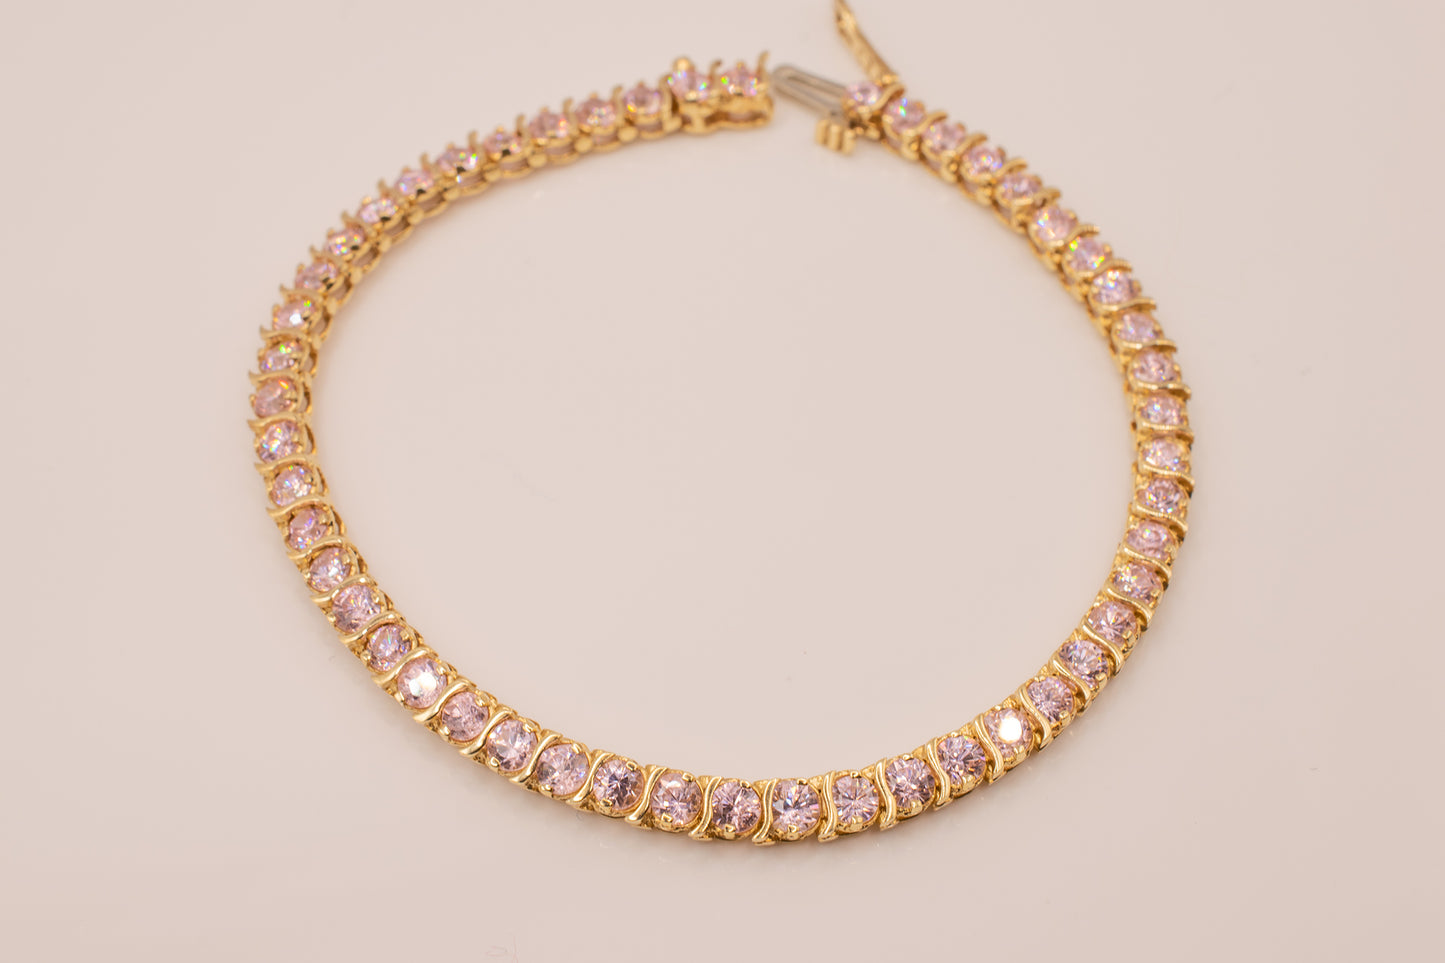 Vintage 14 Karat Yellow Gold Baby Pink 3mm Diamond Simulant Cubic Zirconia S-Design Tennis Line Bracelet 7 Inches Long